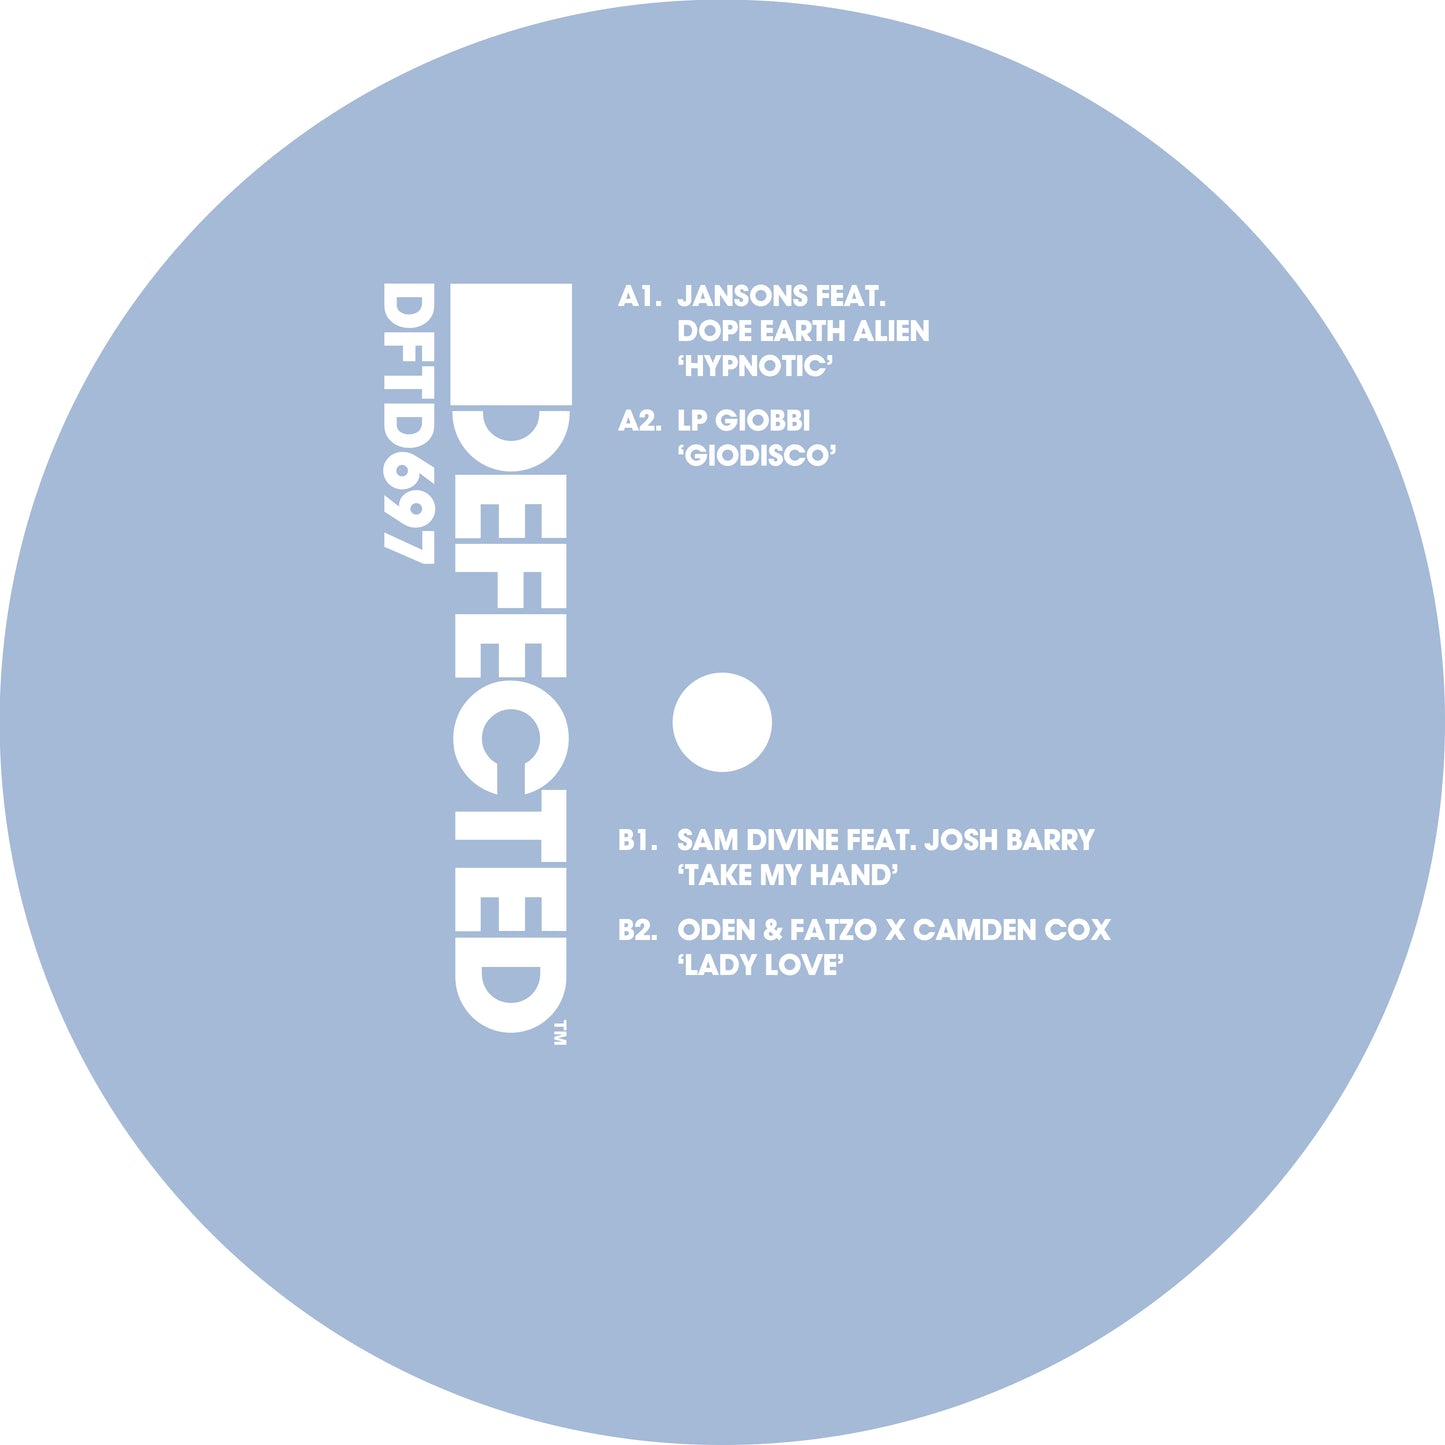 Jansons, LP Giobbi, Sam Divine, Oden & Fatzo x Camden Cox - EP19 [Defected]